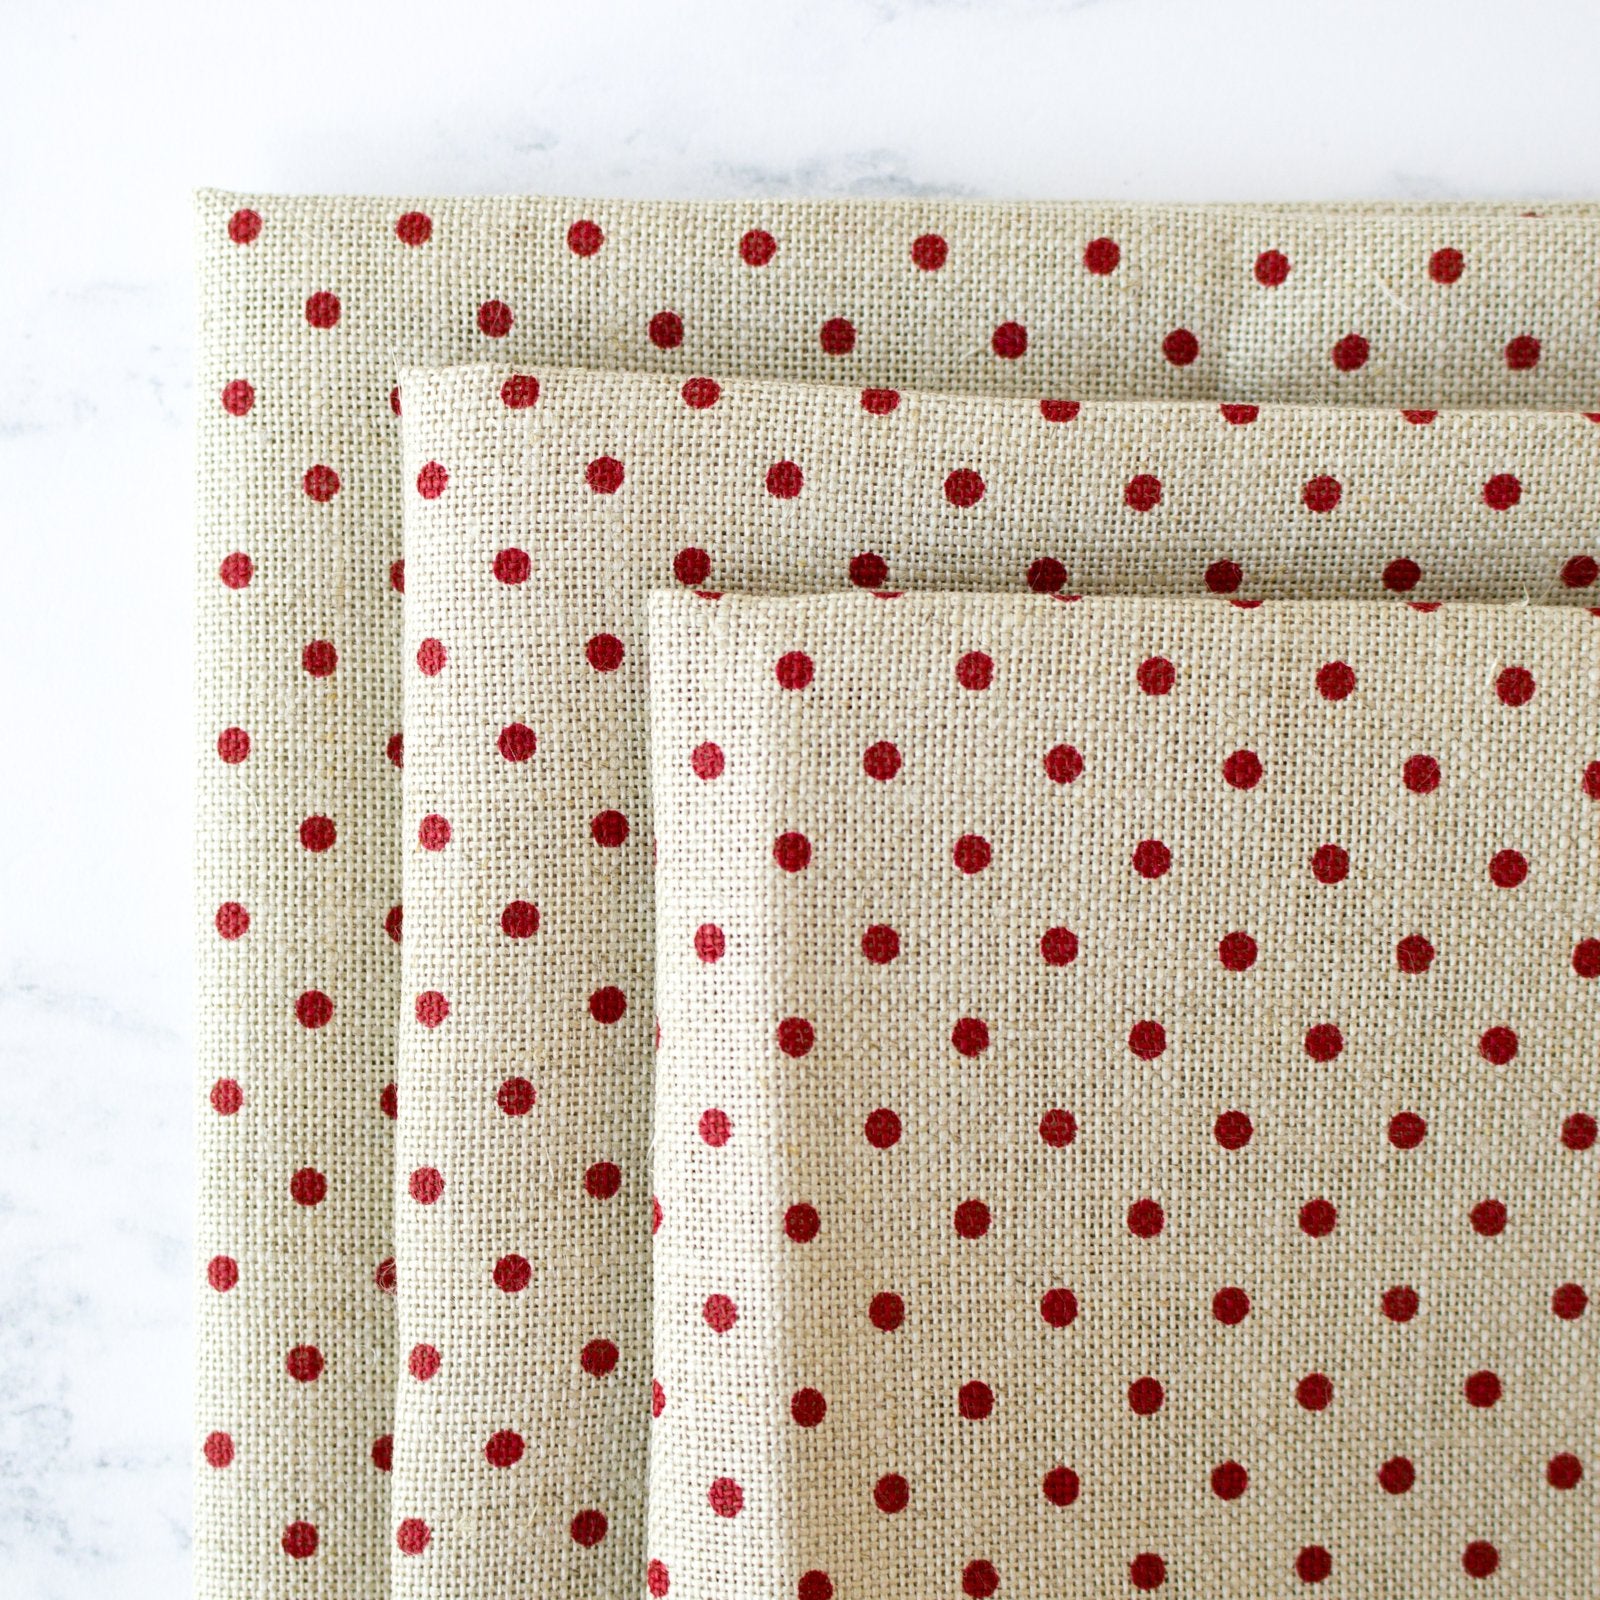 Arbitrage Uberettiget toksicitet Natural/Red Polka Dot Linen Fabric - 32 Count - Stitched Modern